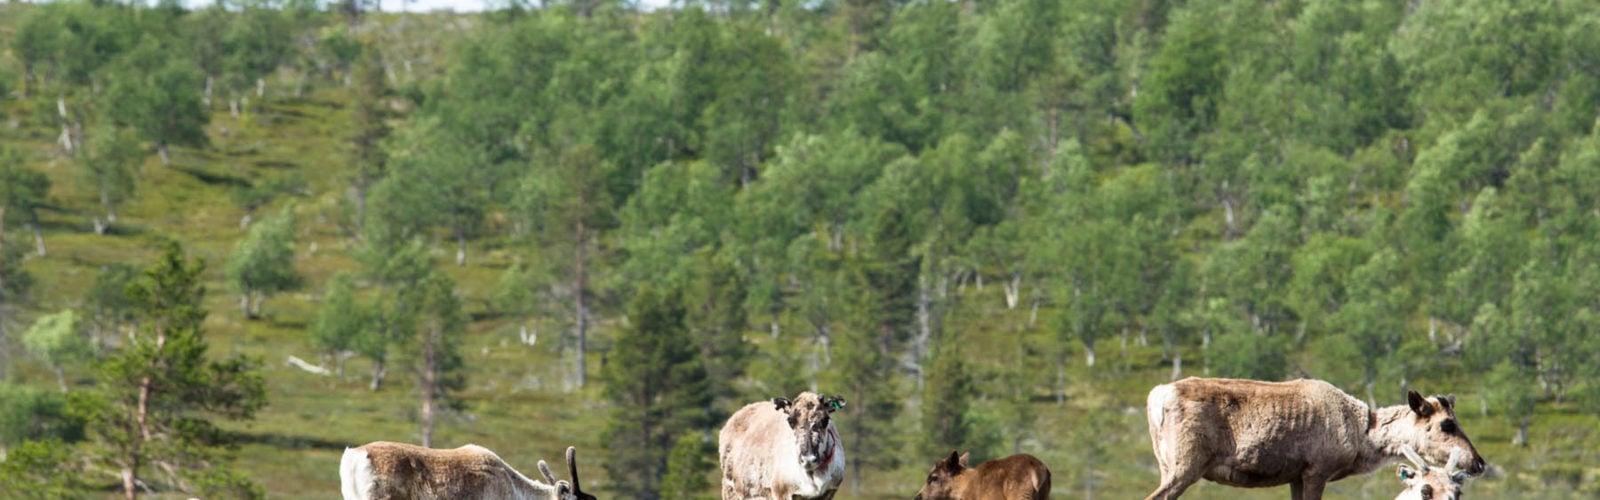 javri-lodge-reindeer